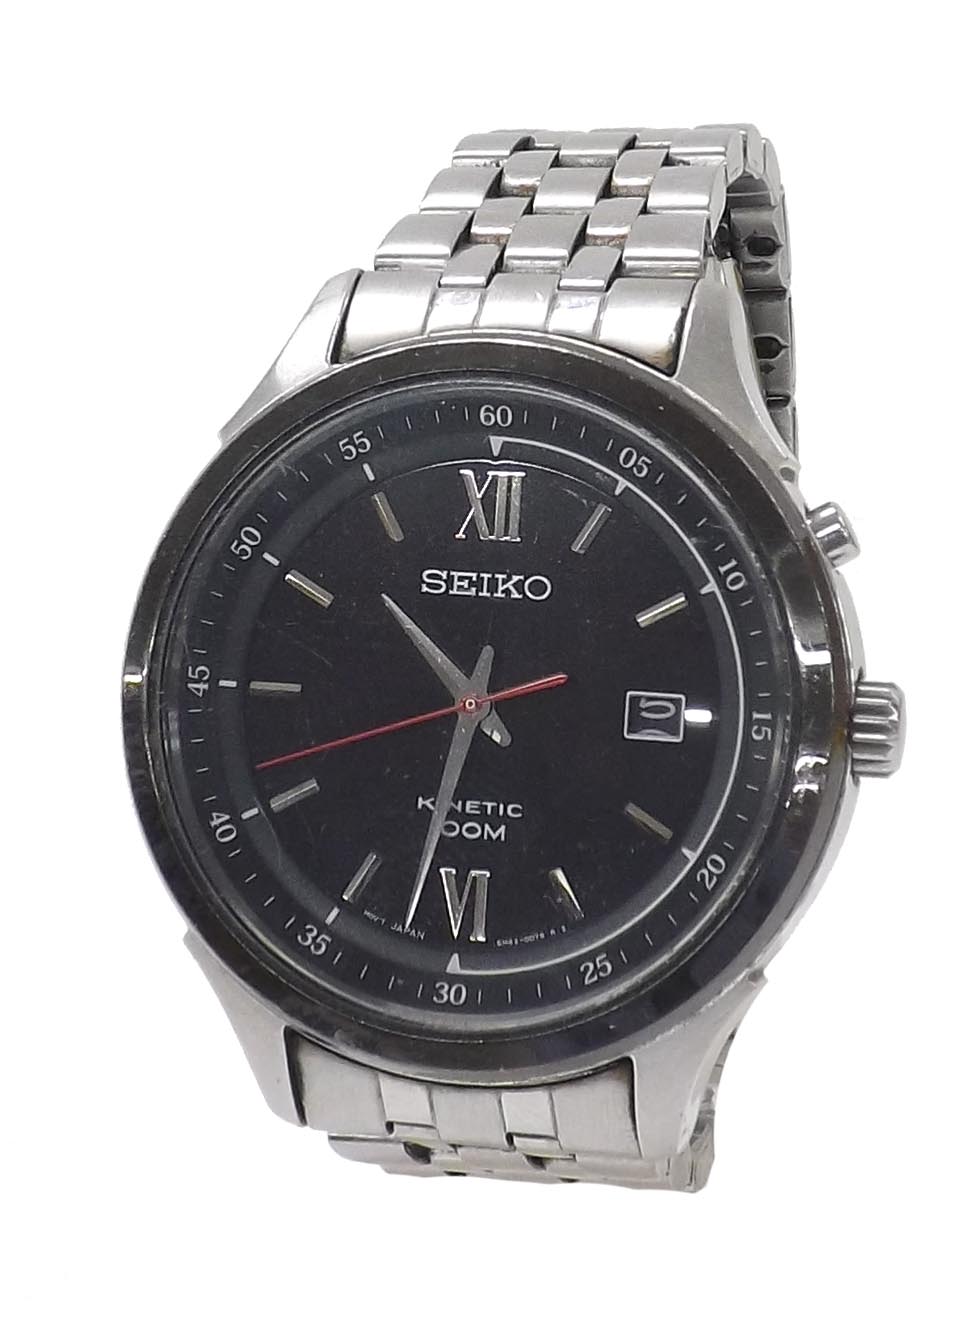 Seiko Kinetic 100m stainless steel gentleman's bracelet watch, ref. 5M62- 0DF0, no. 471703, black